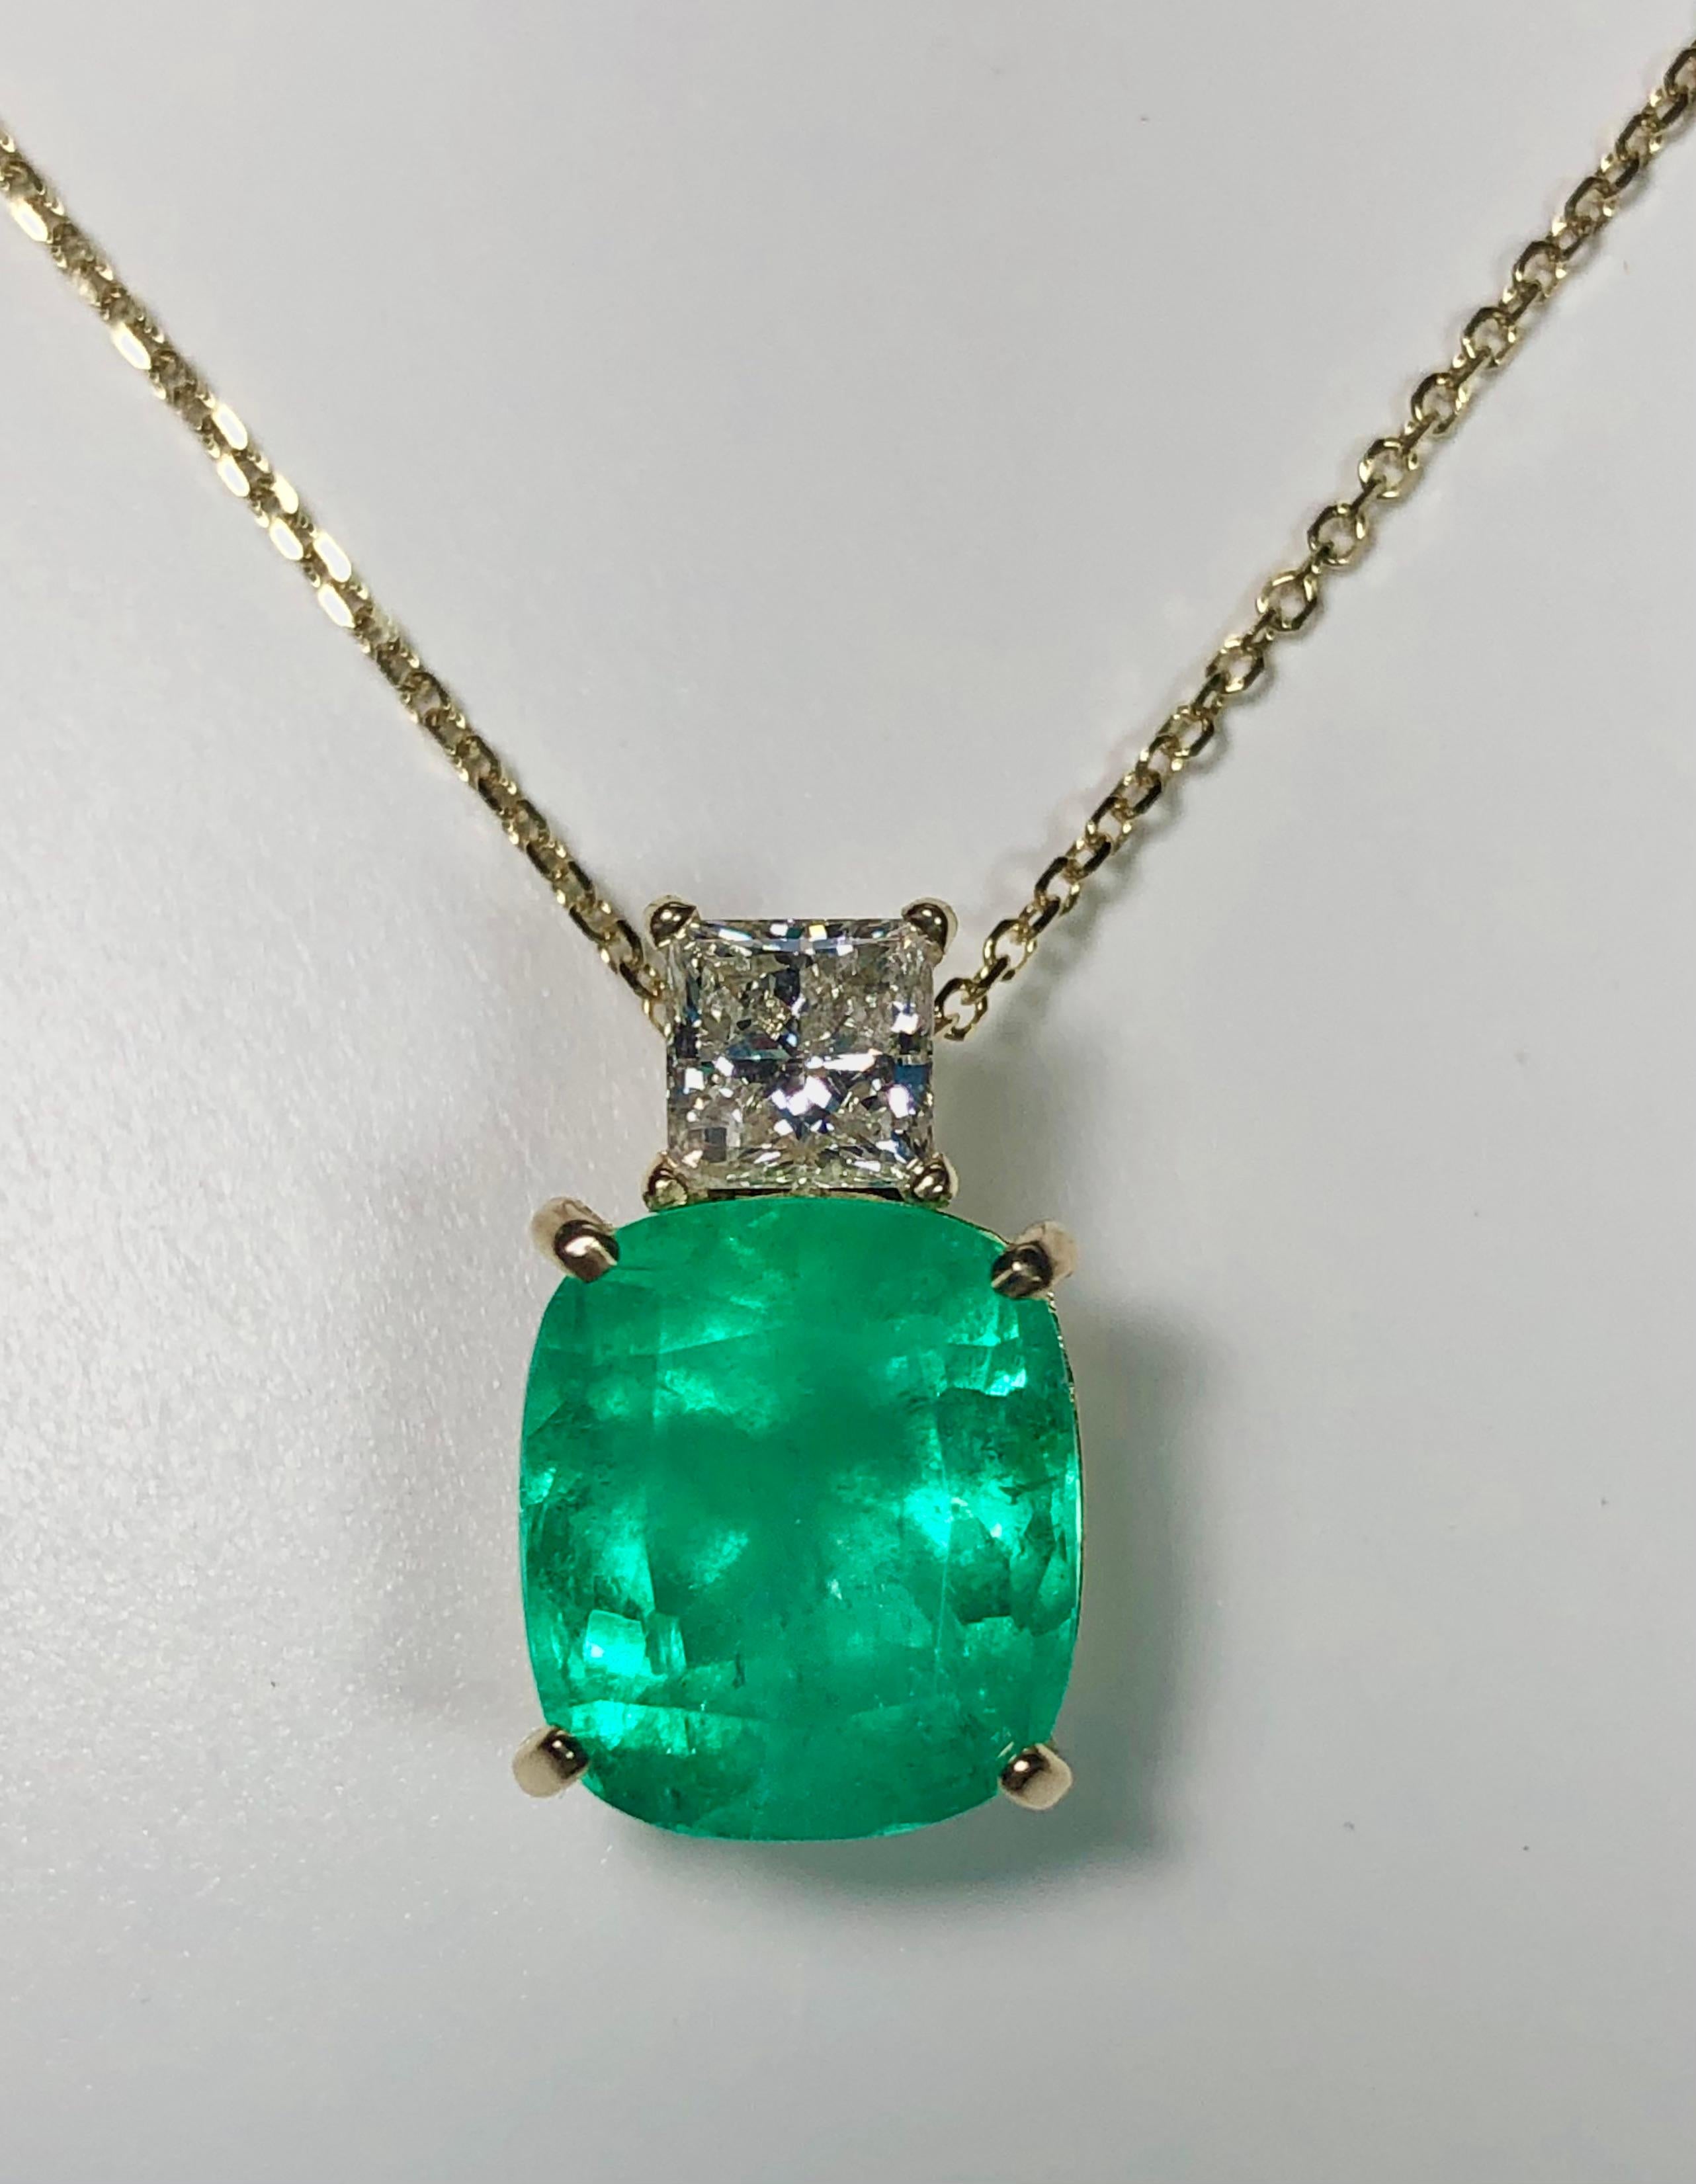 
Details: Origin Colombian Emerald 
Cushion-Cut, Color: Forest Medium Green, Carat: 6.15 Carat 
Diamond Details: 
Princess Cut, Carat: 0.85 Carat Total Weight, Color: G Clarity: SI2  
Metal Type: 18 Karat Yellow Gold 
Weight: 5.6 grams  
Stunning